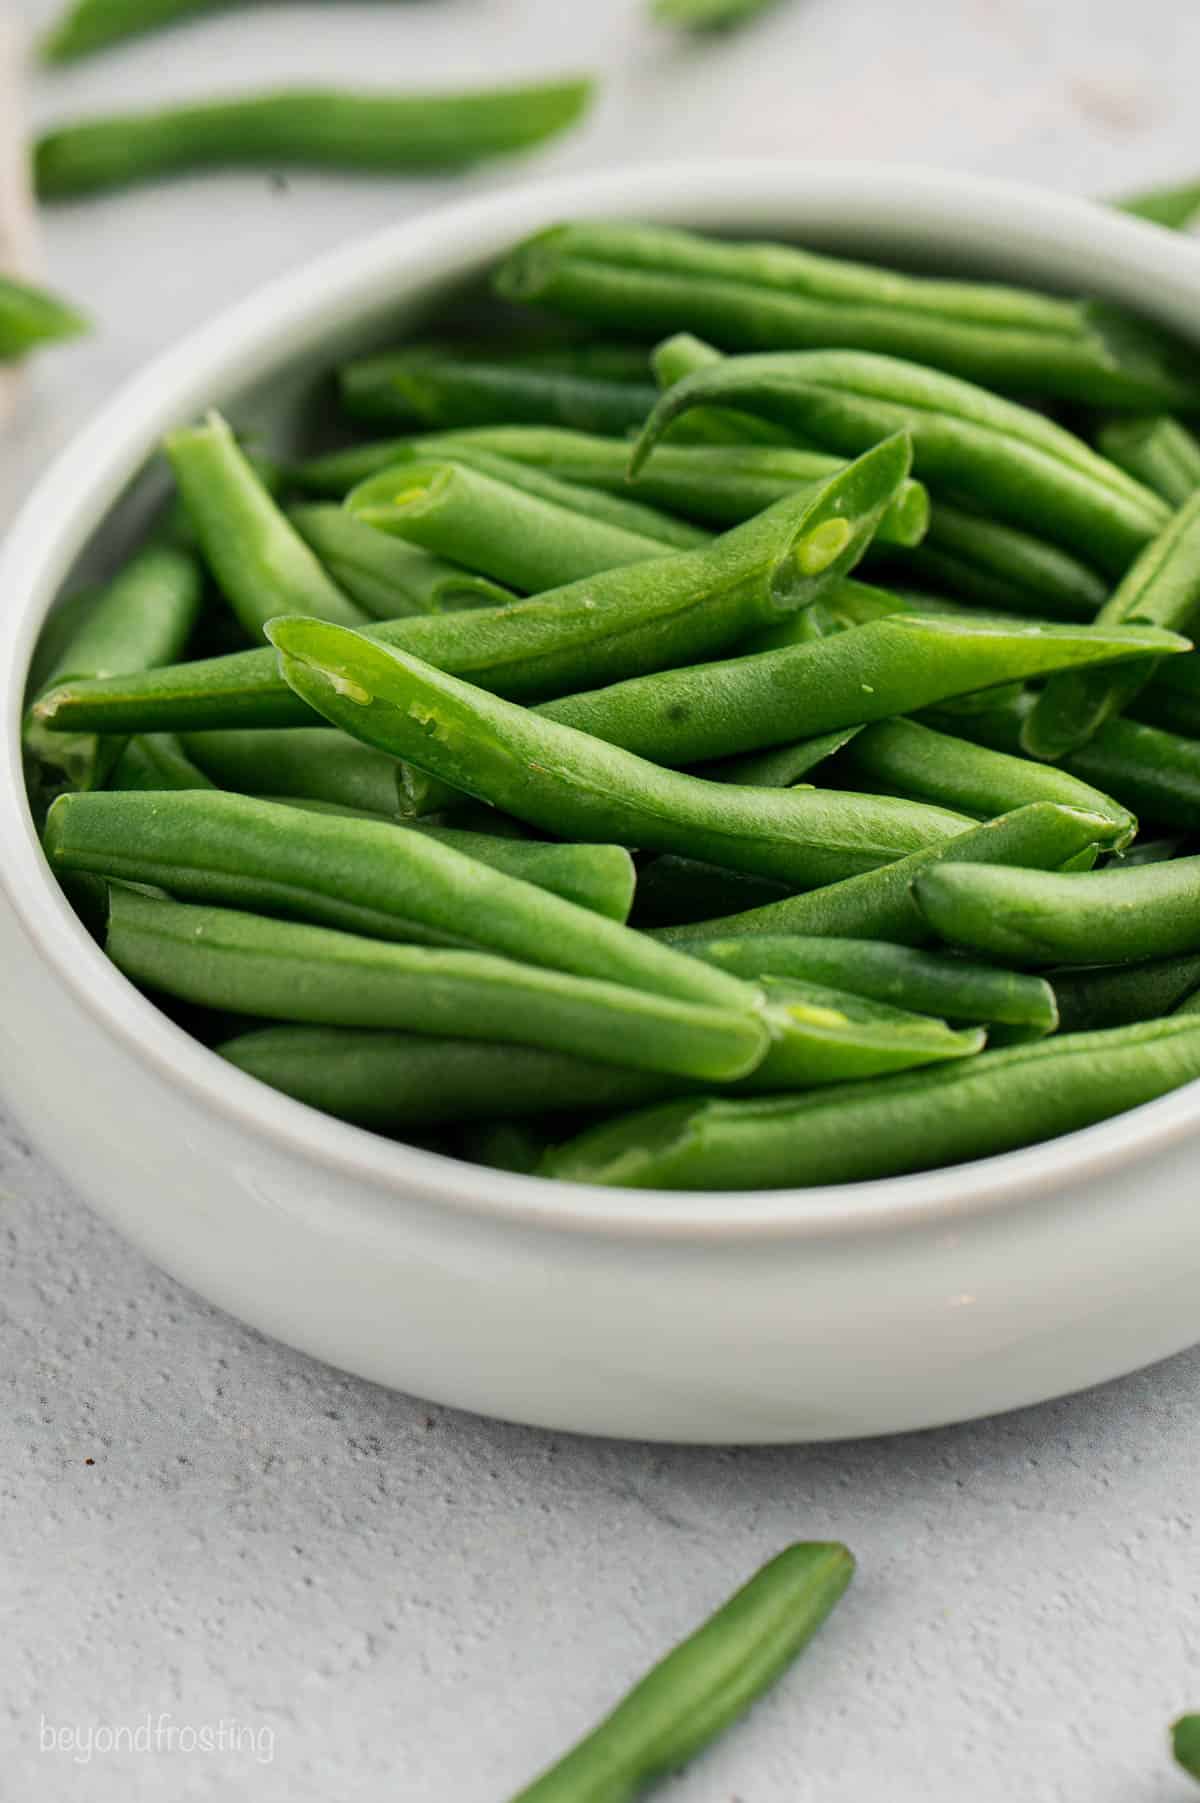 A bowl of fresh green beans